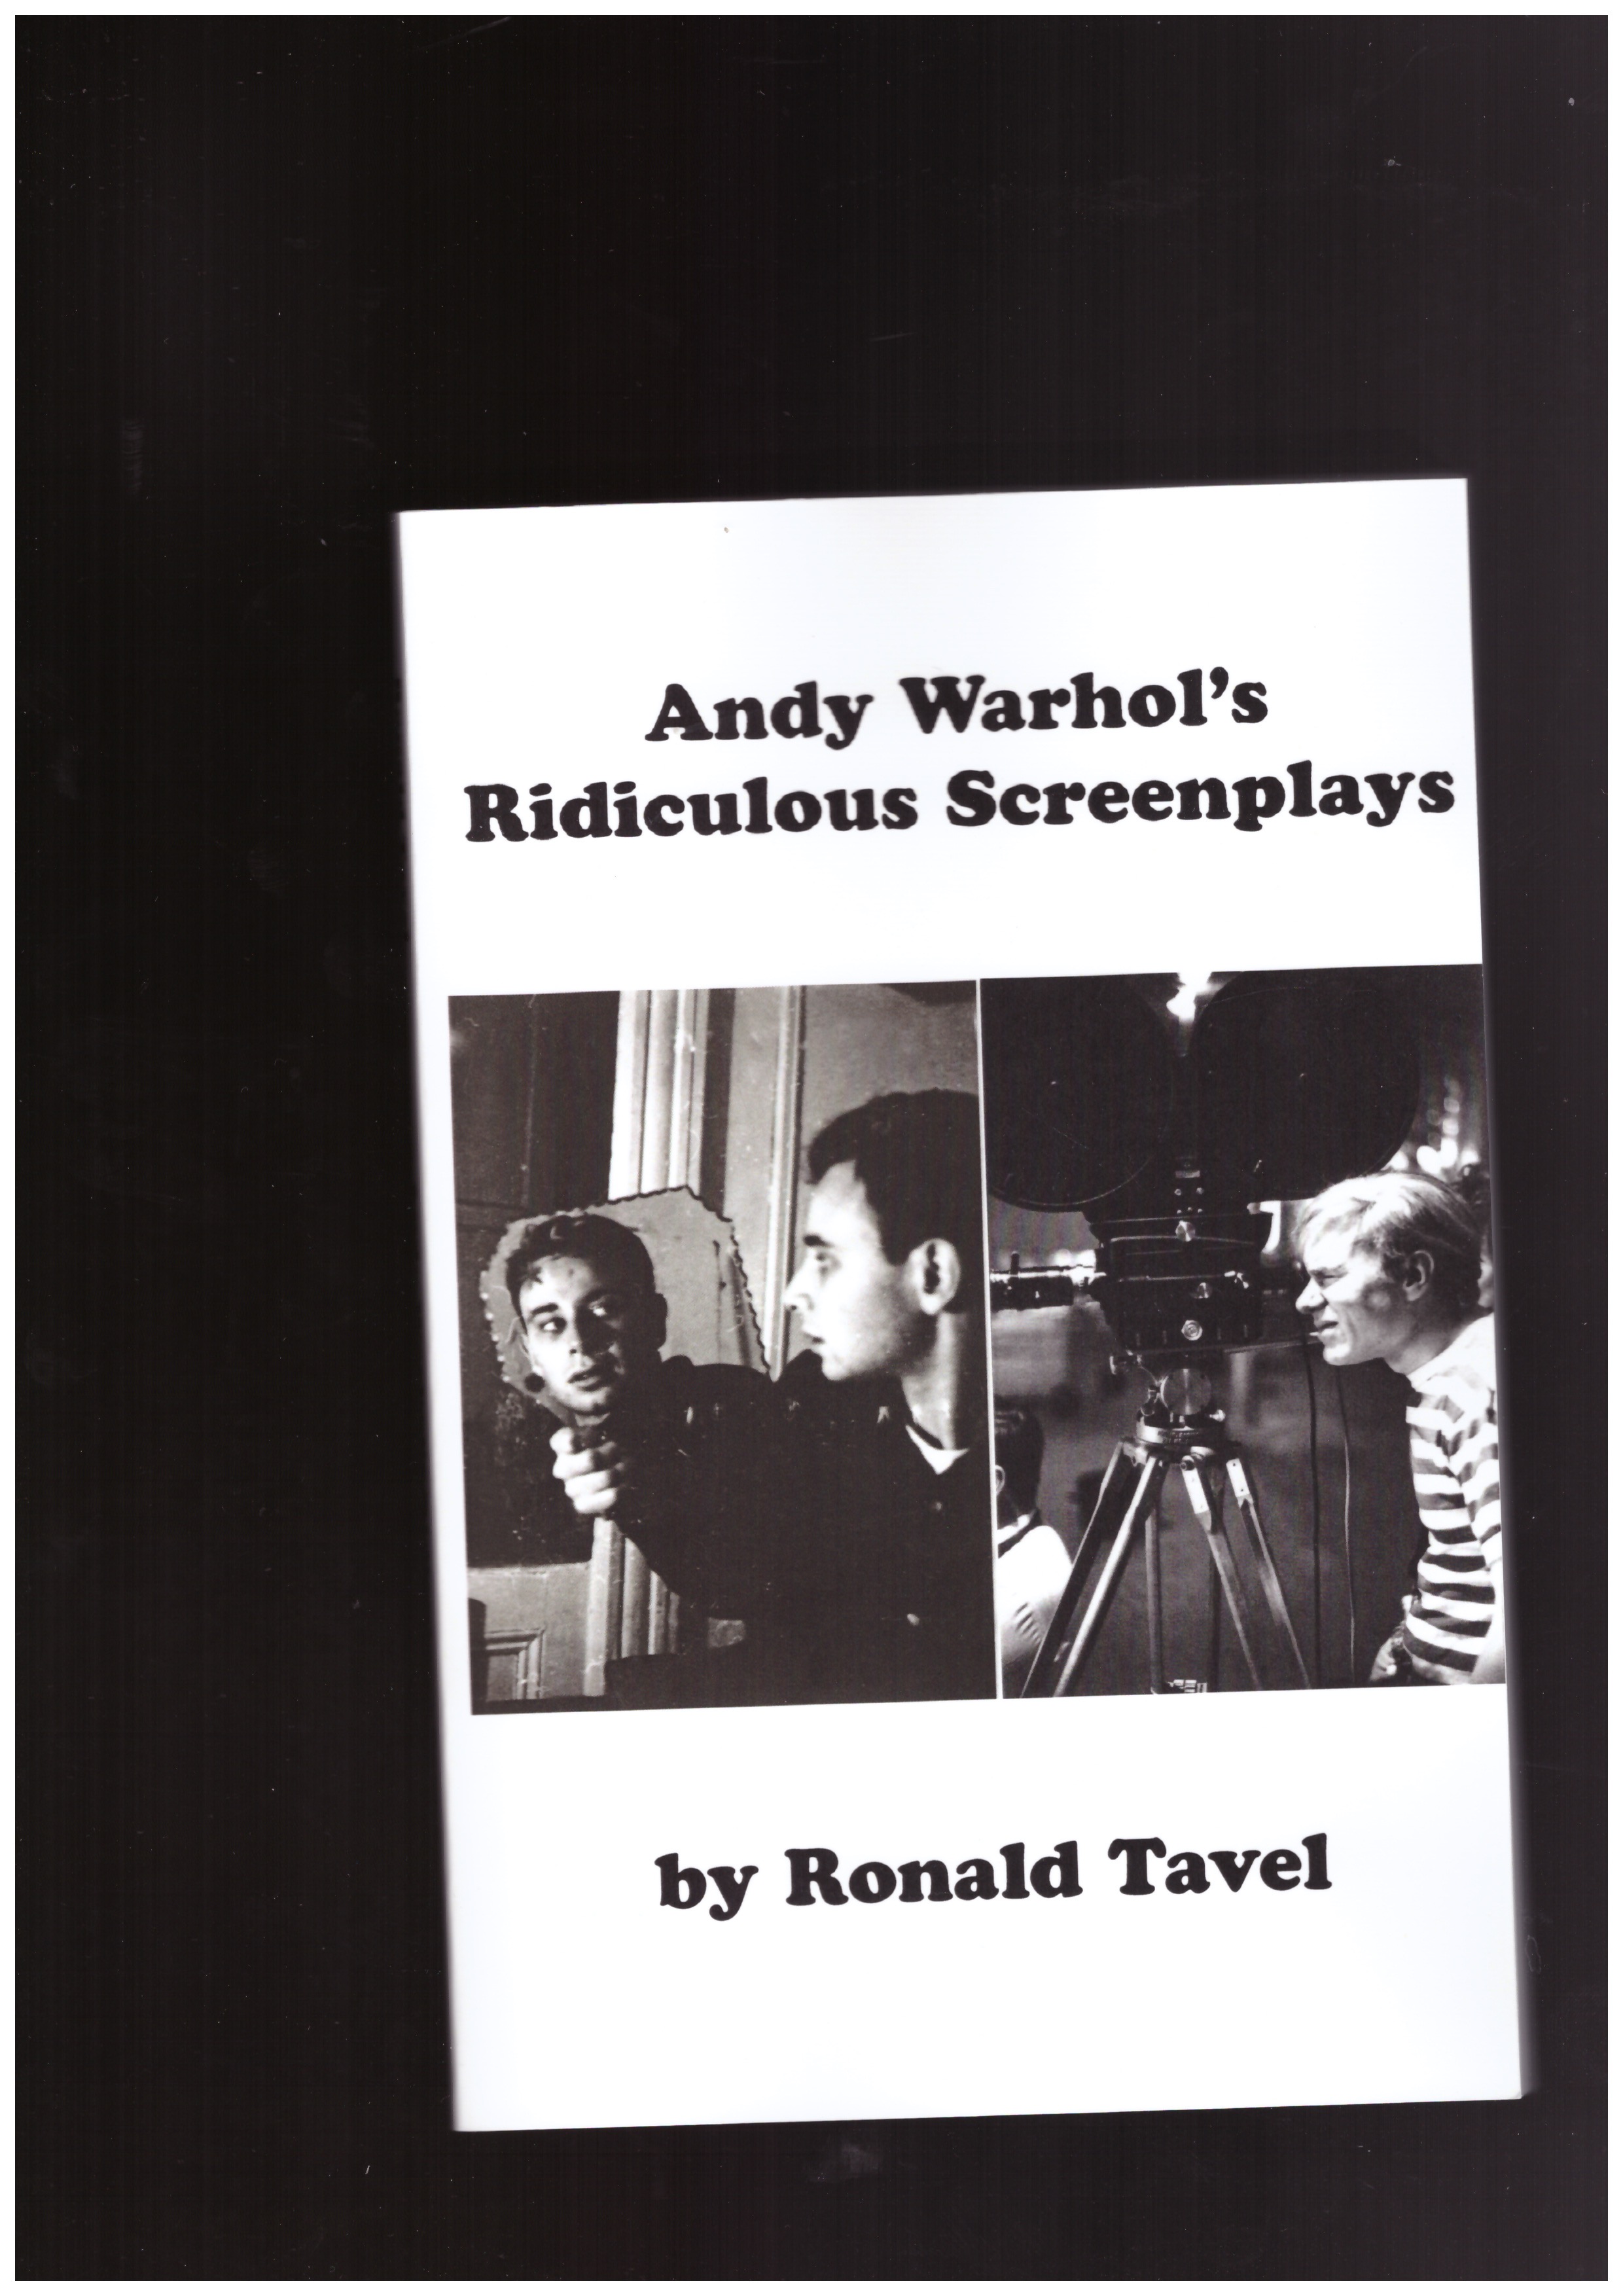 TAVEL, Ronald - Andy Warhol’s Ridiculous Screenplays